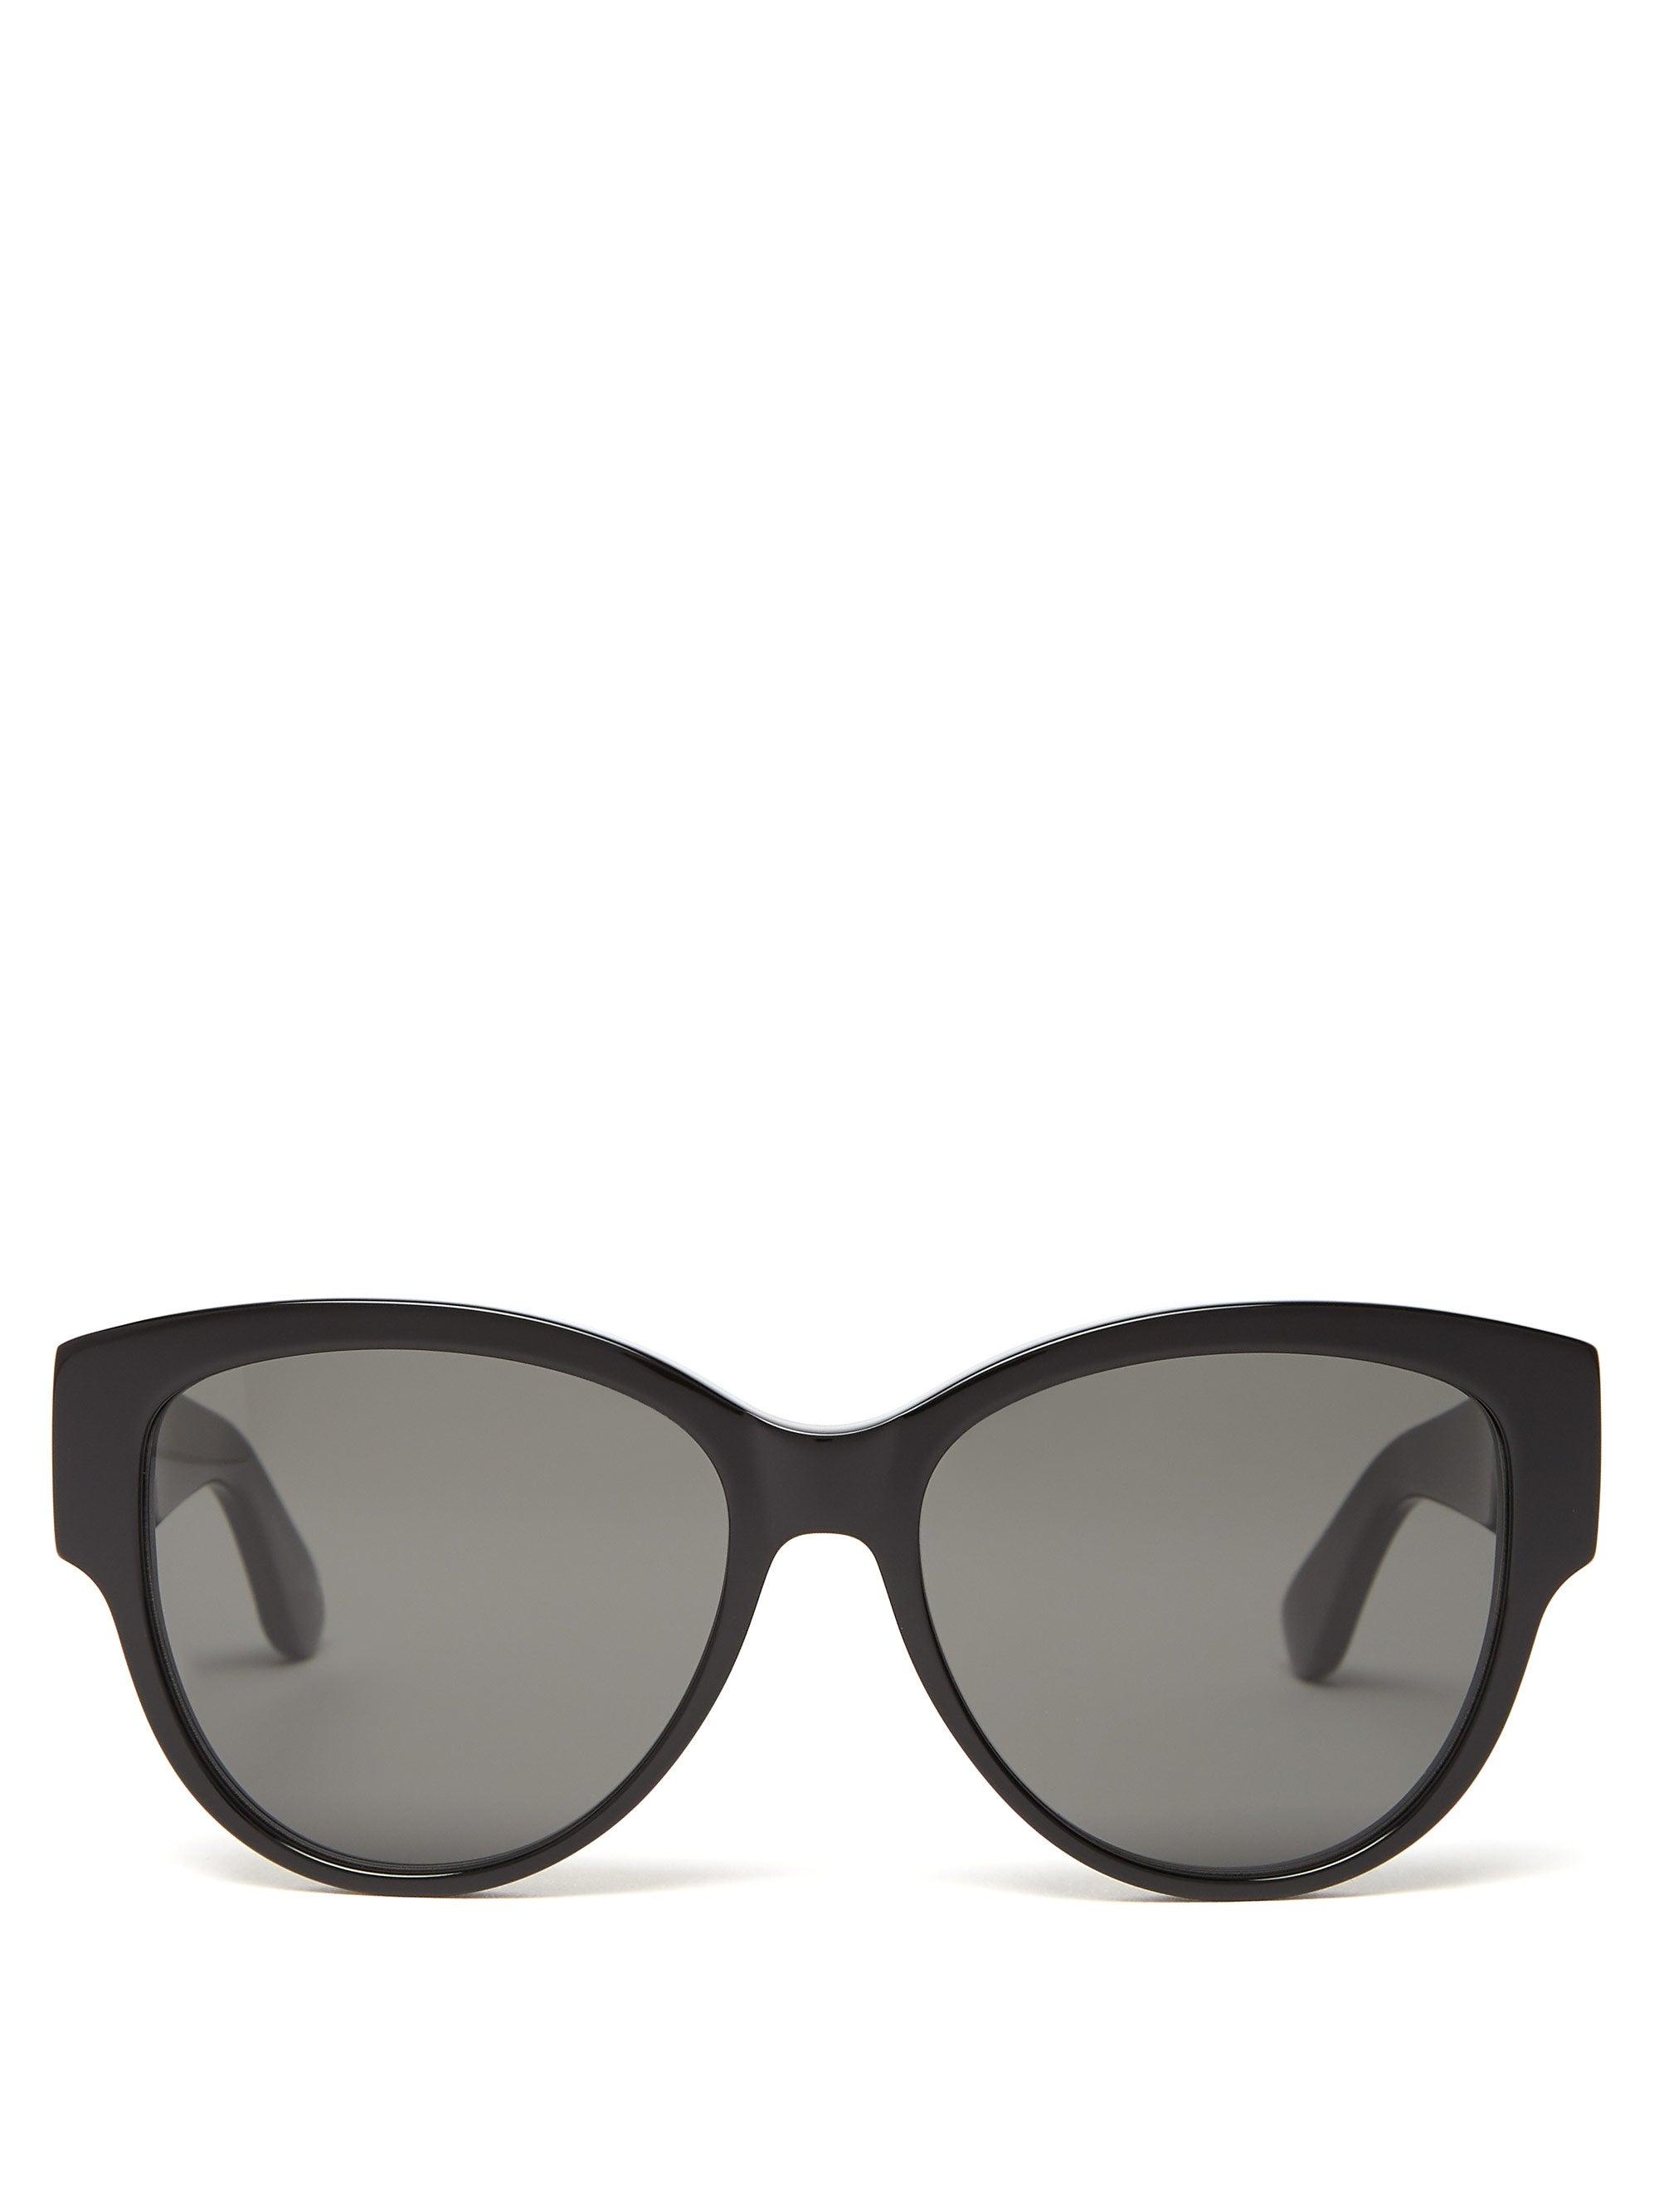 Saint Laurent Leather Oversized Cat-eye Acetate Sunglasses in 